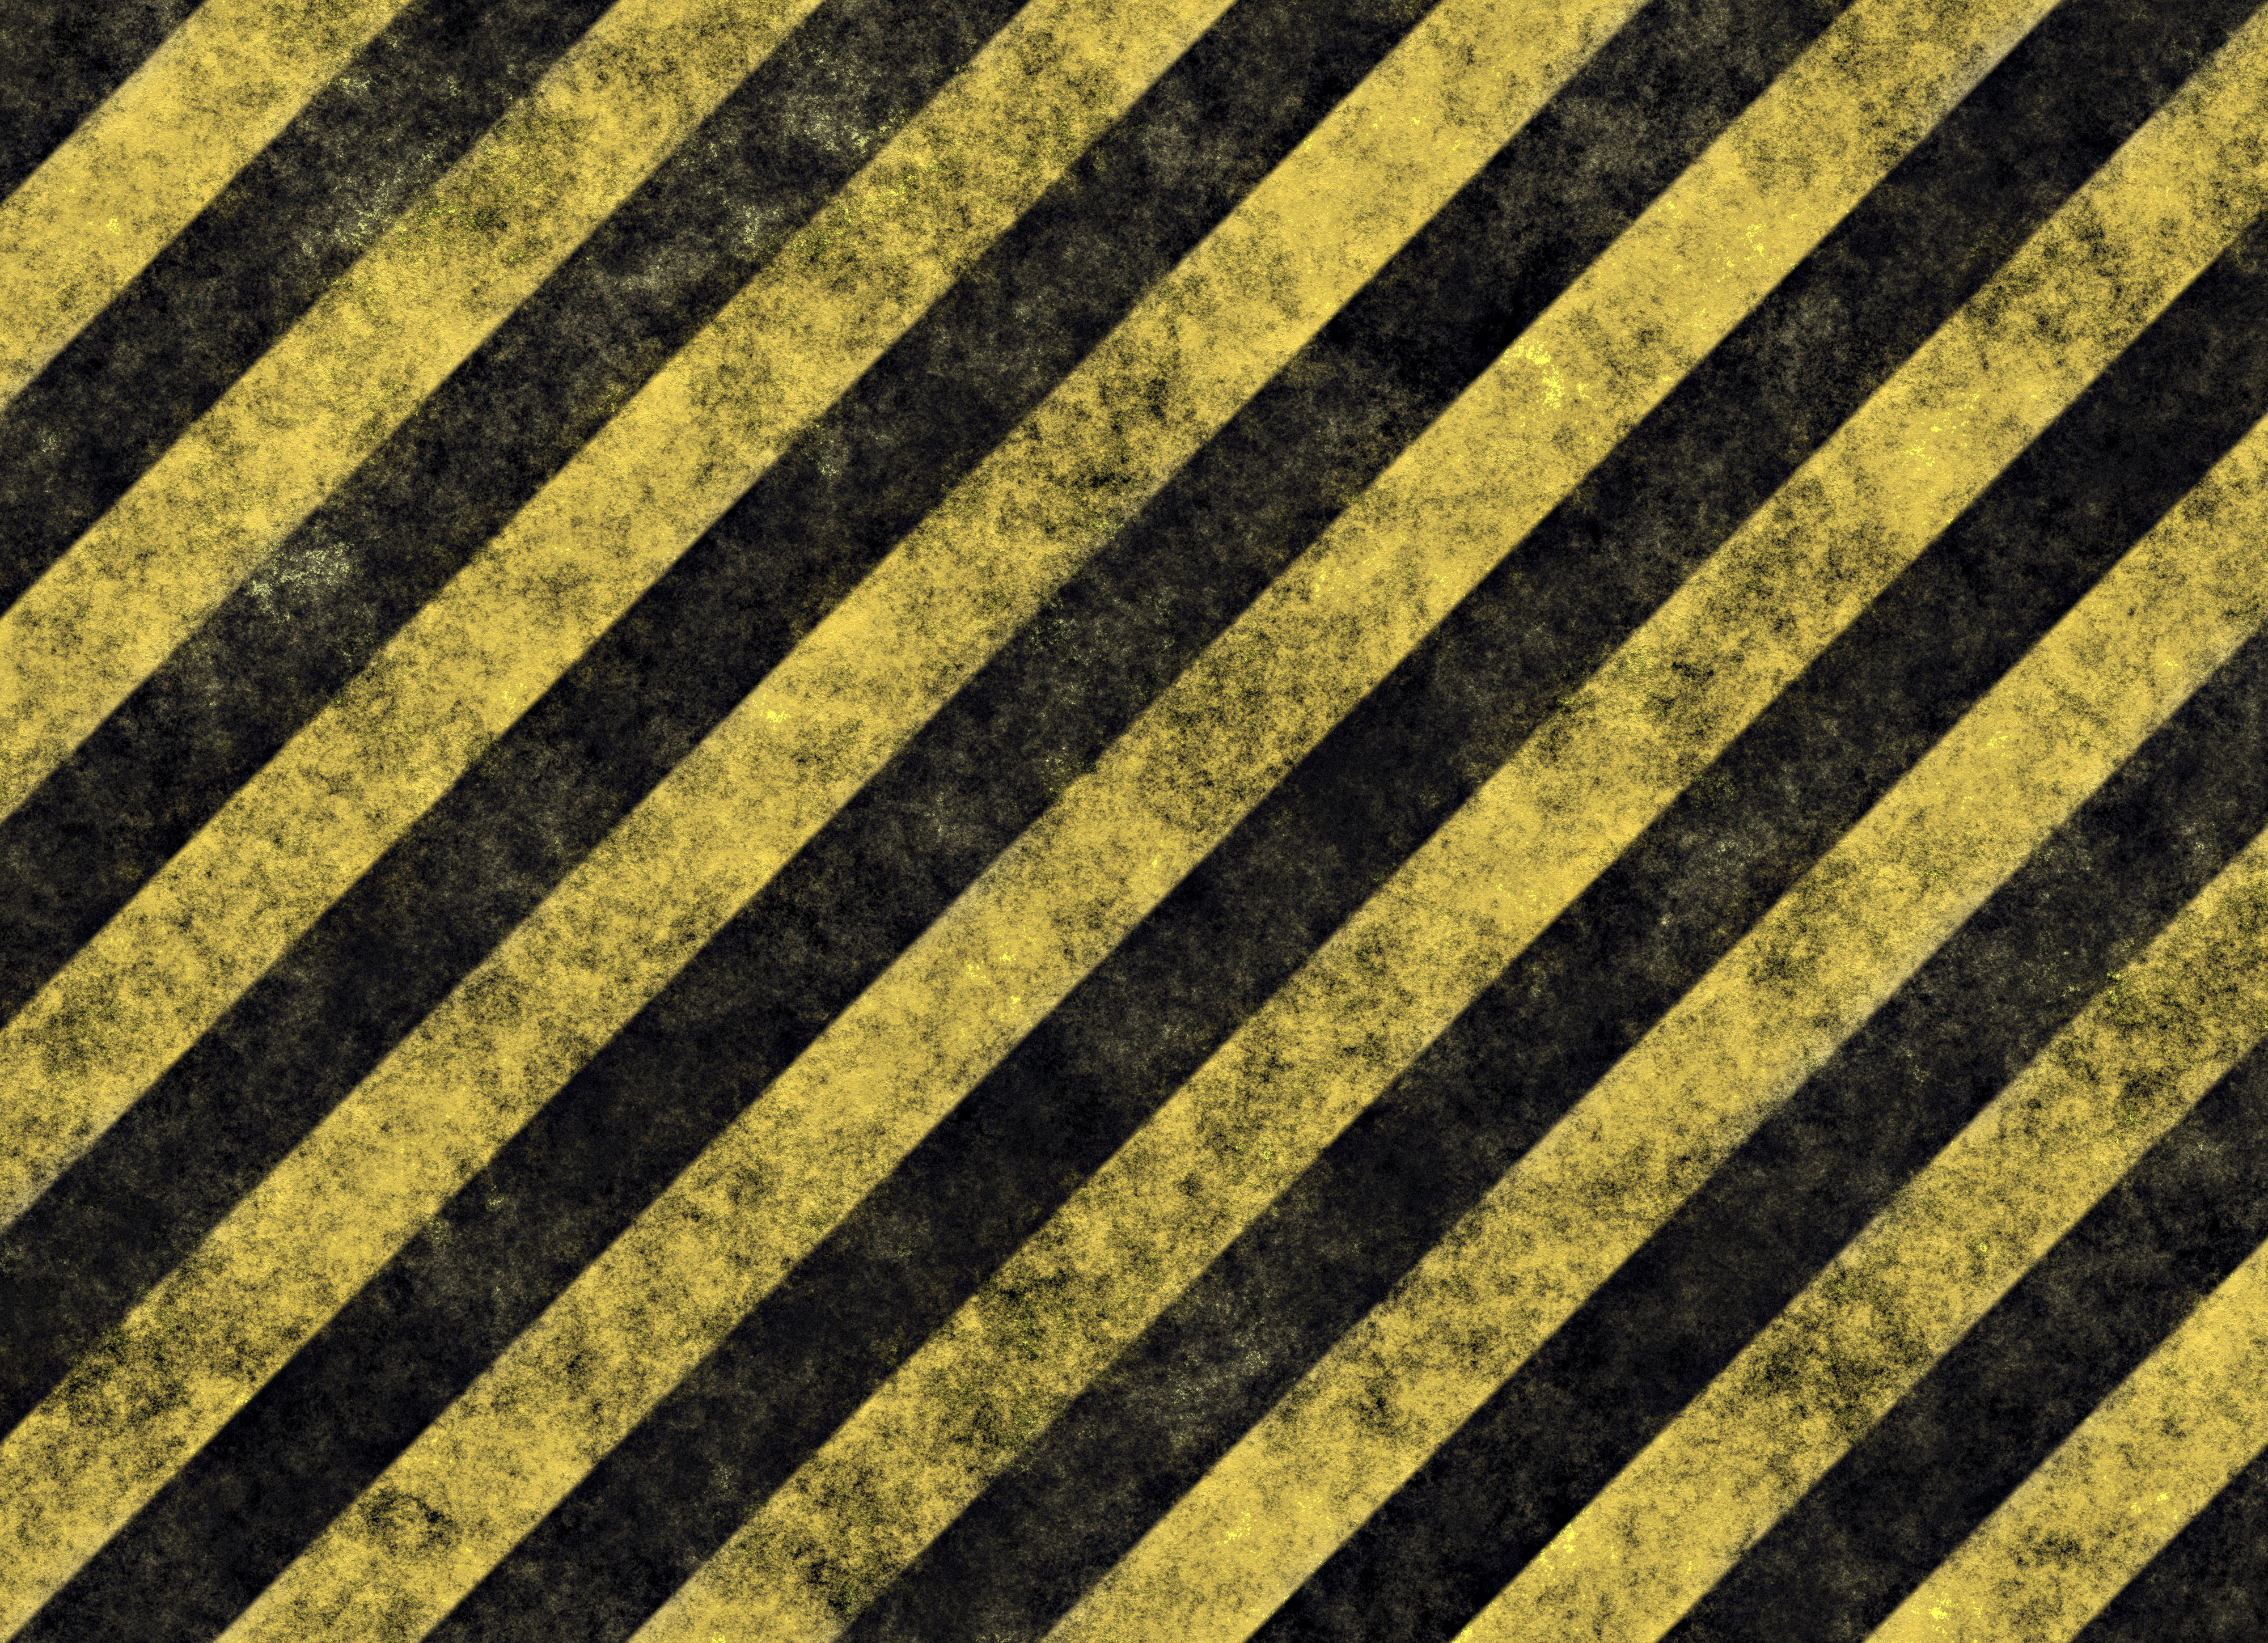 Hazard Stripes Wallpaper Or Background Image | Www.myfreetextures ...